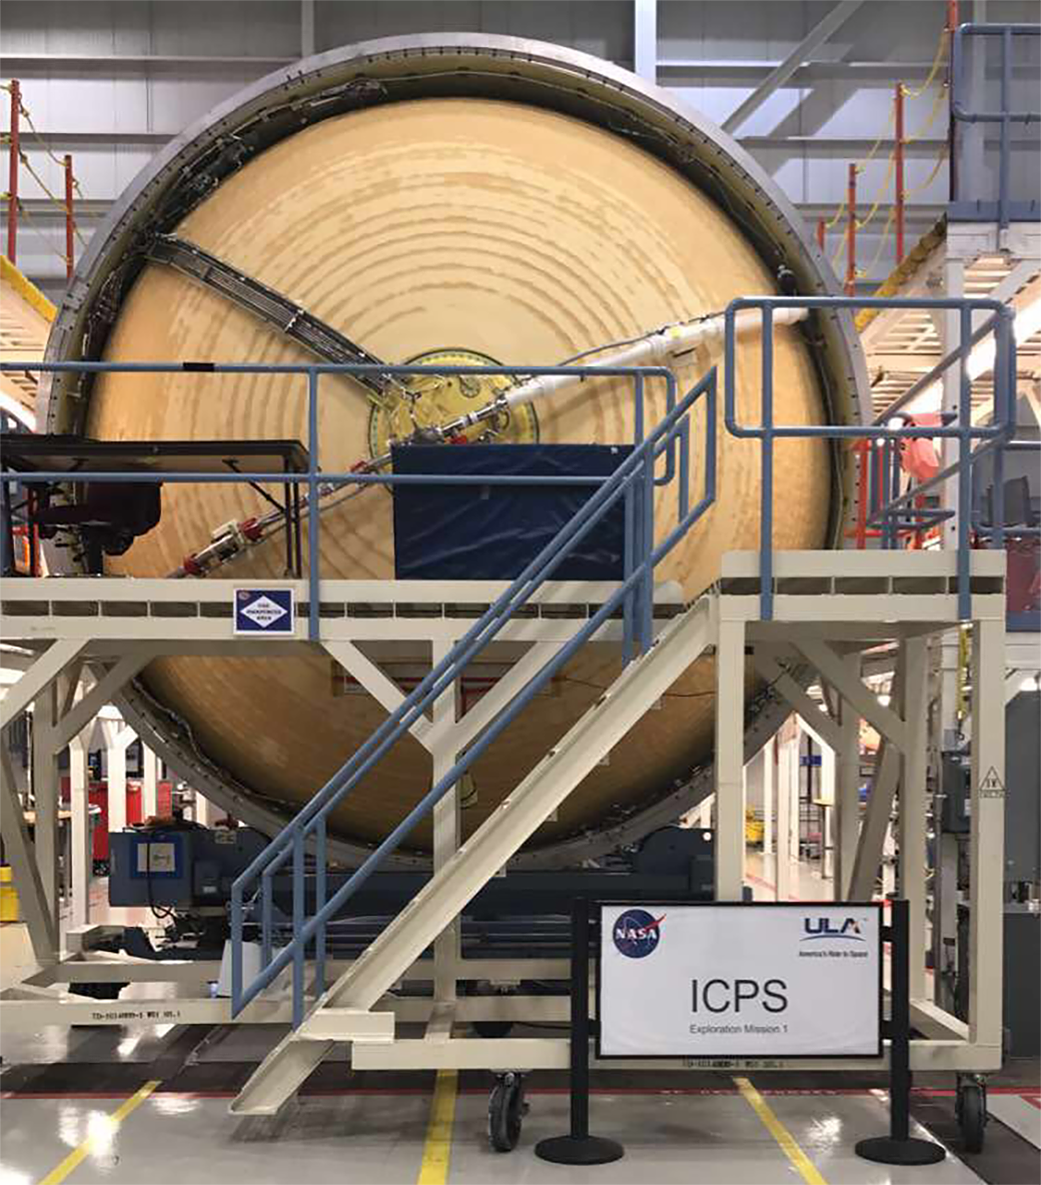 Interim cryogenic propulsion stage (ICPS) 